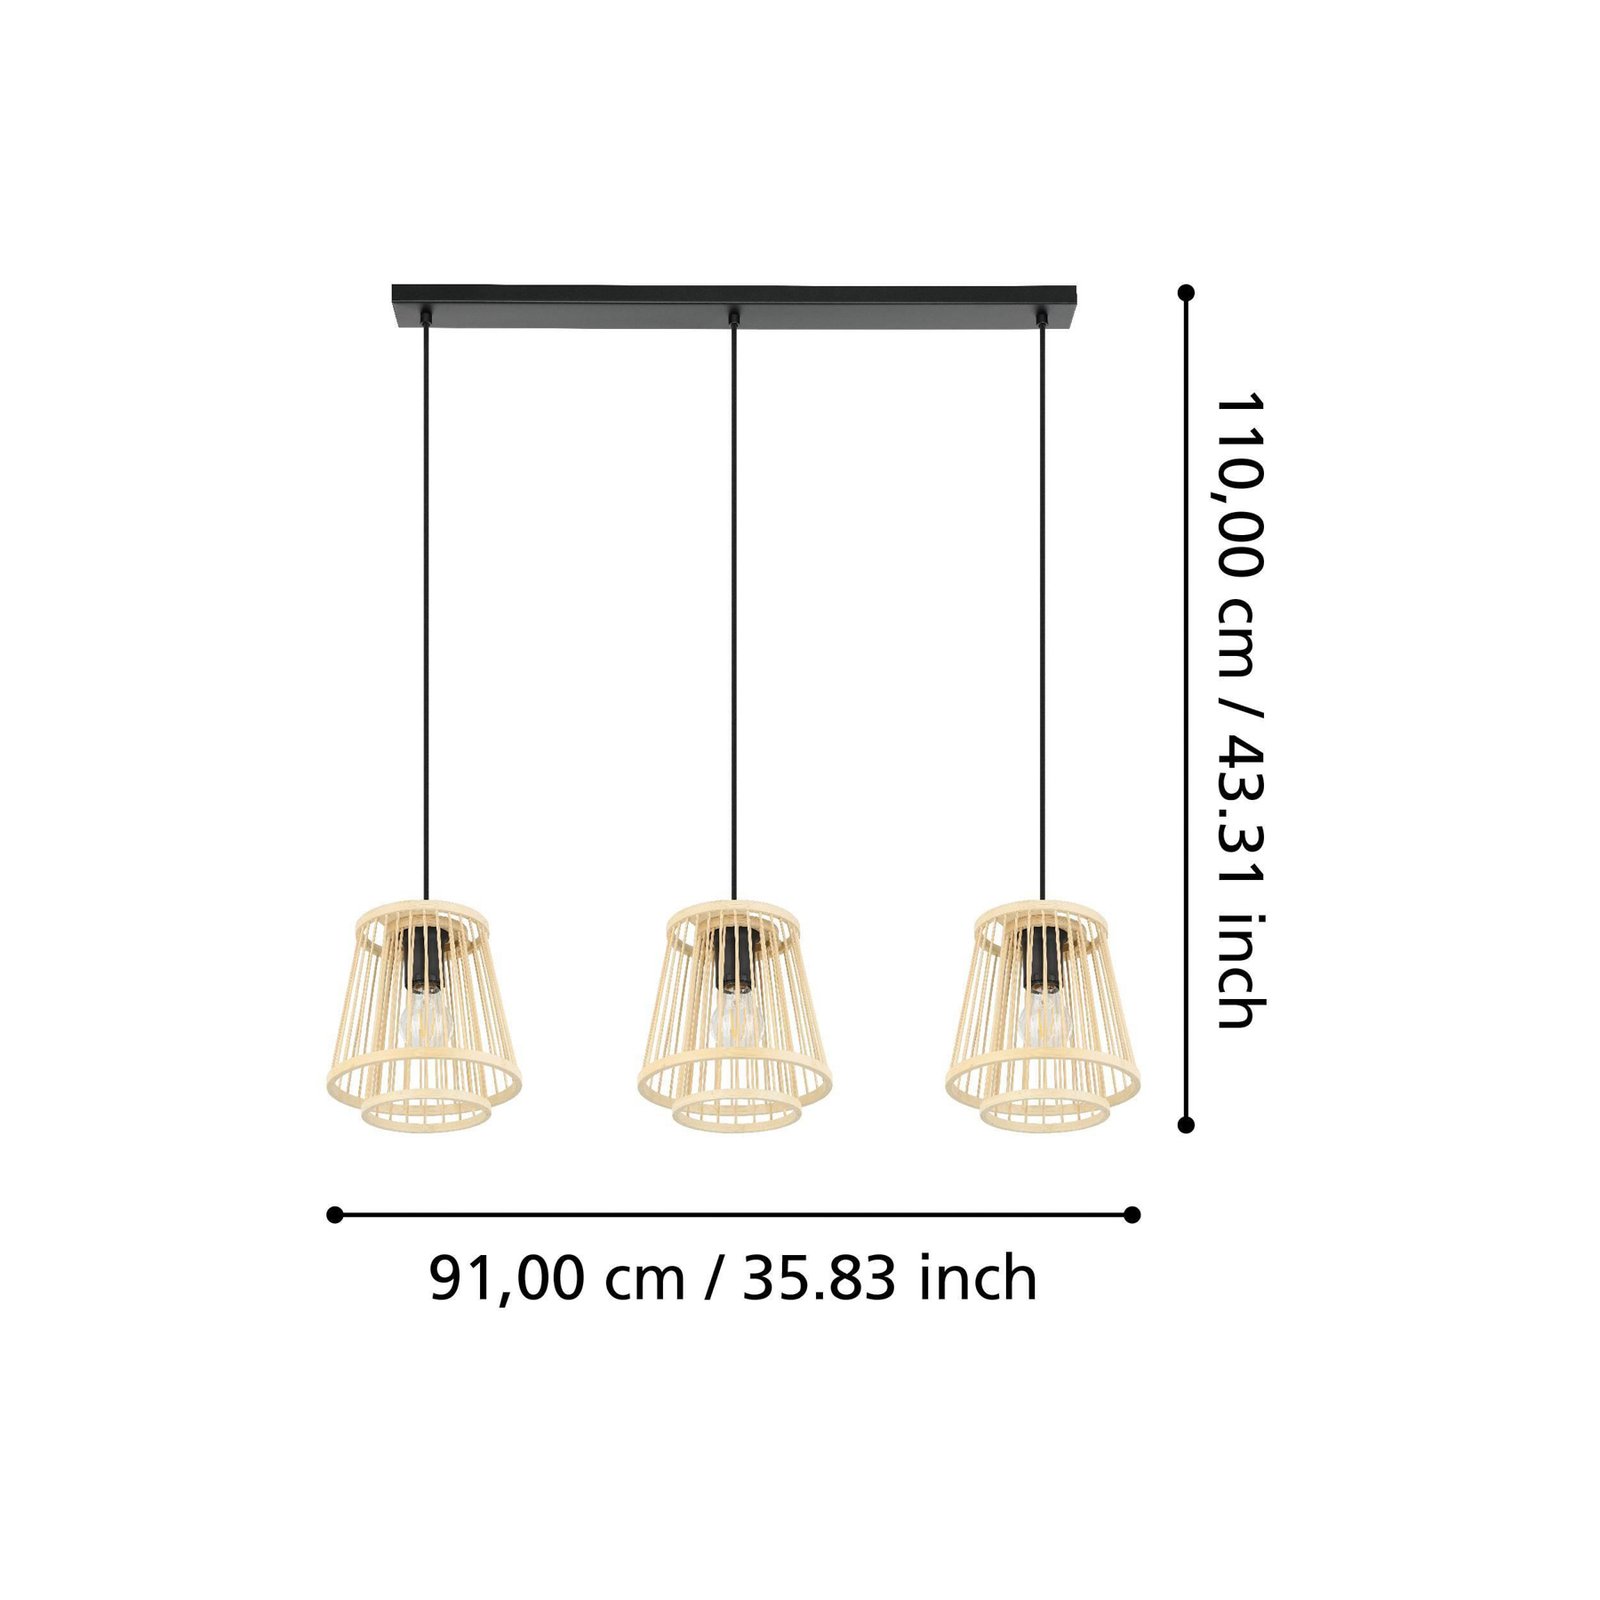 Viseća lampa Hykeham, dužina 91 cm, prirodna, 3 žarulje, bambus